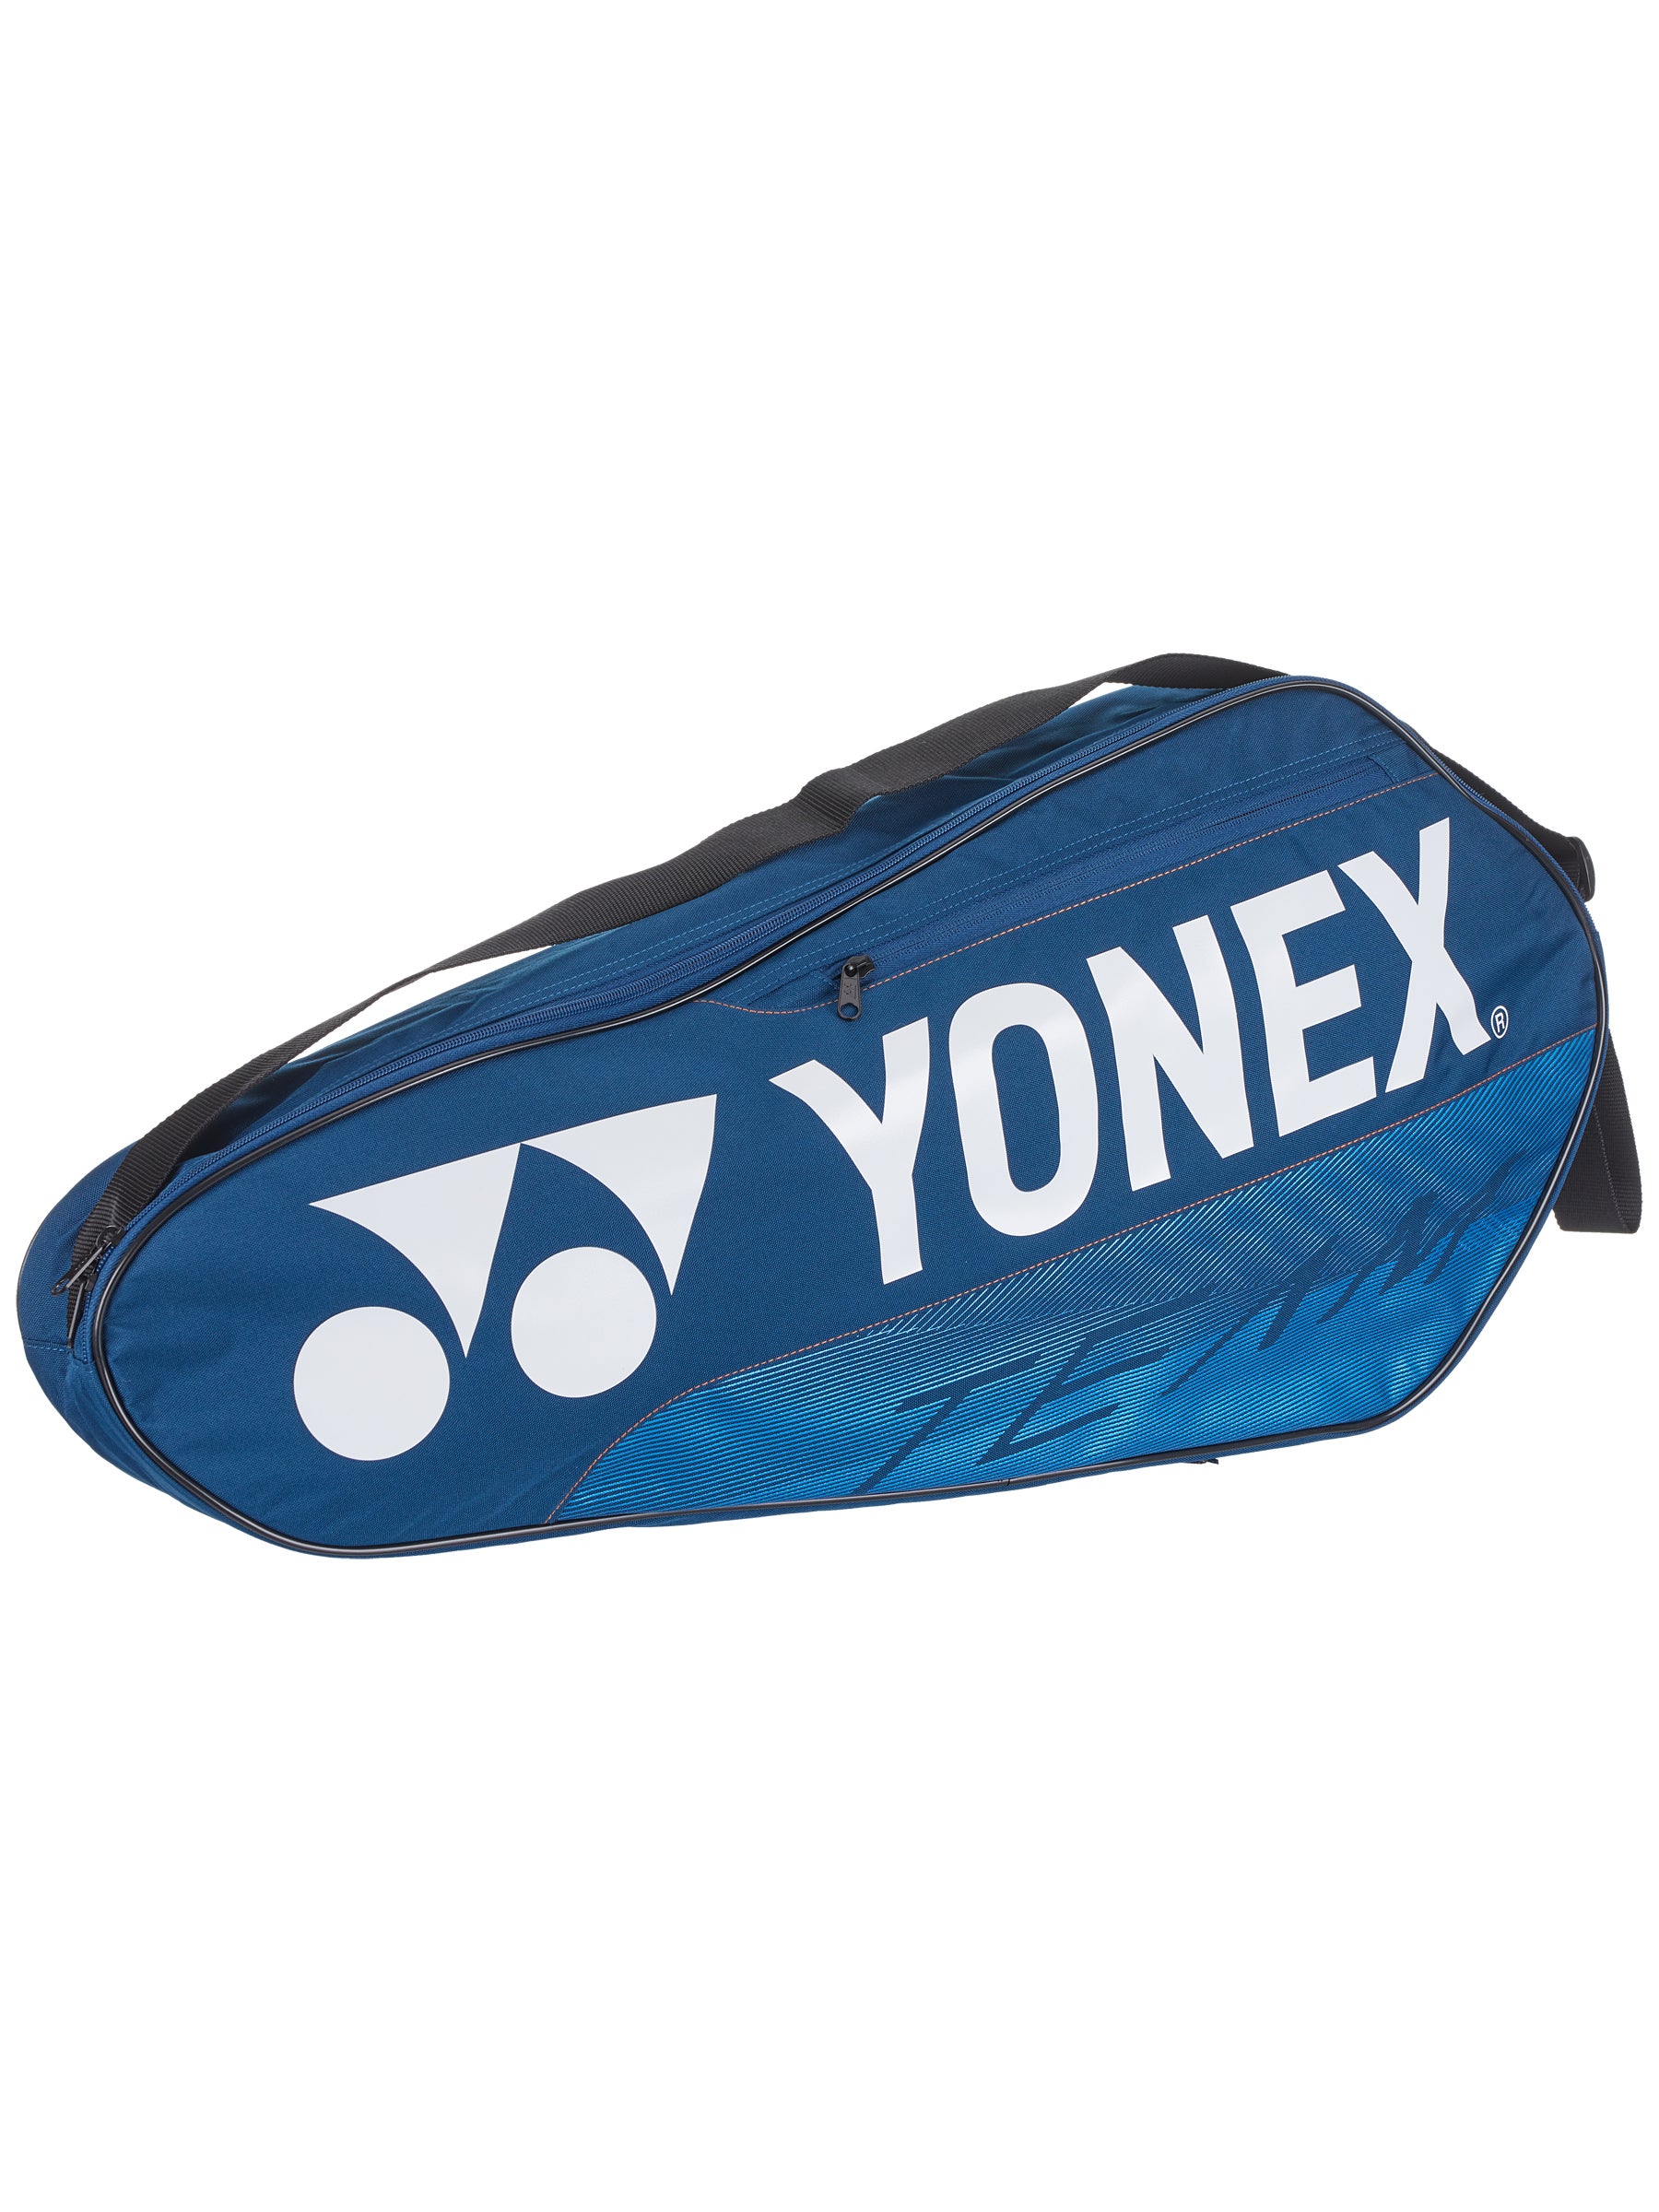 YONEX Tennis Badminton 3 Pack Bag Rucksack White 9 Racket Holder BA29LTDEX 